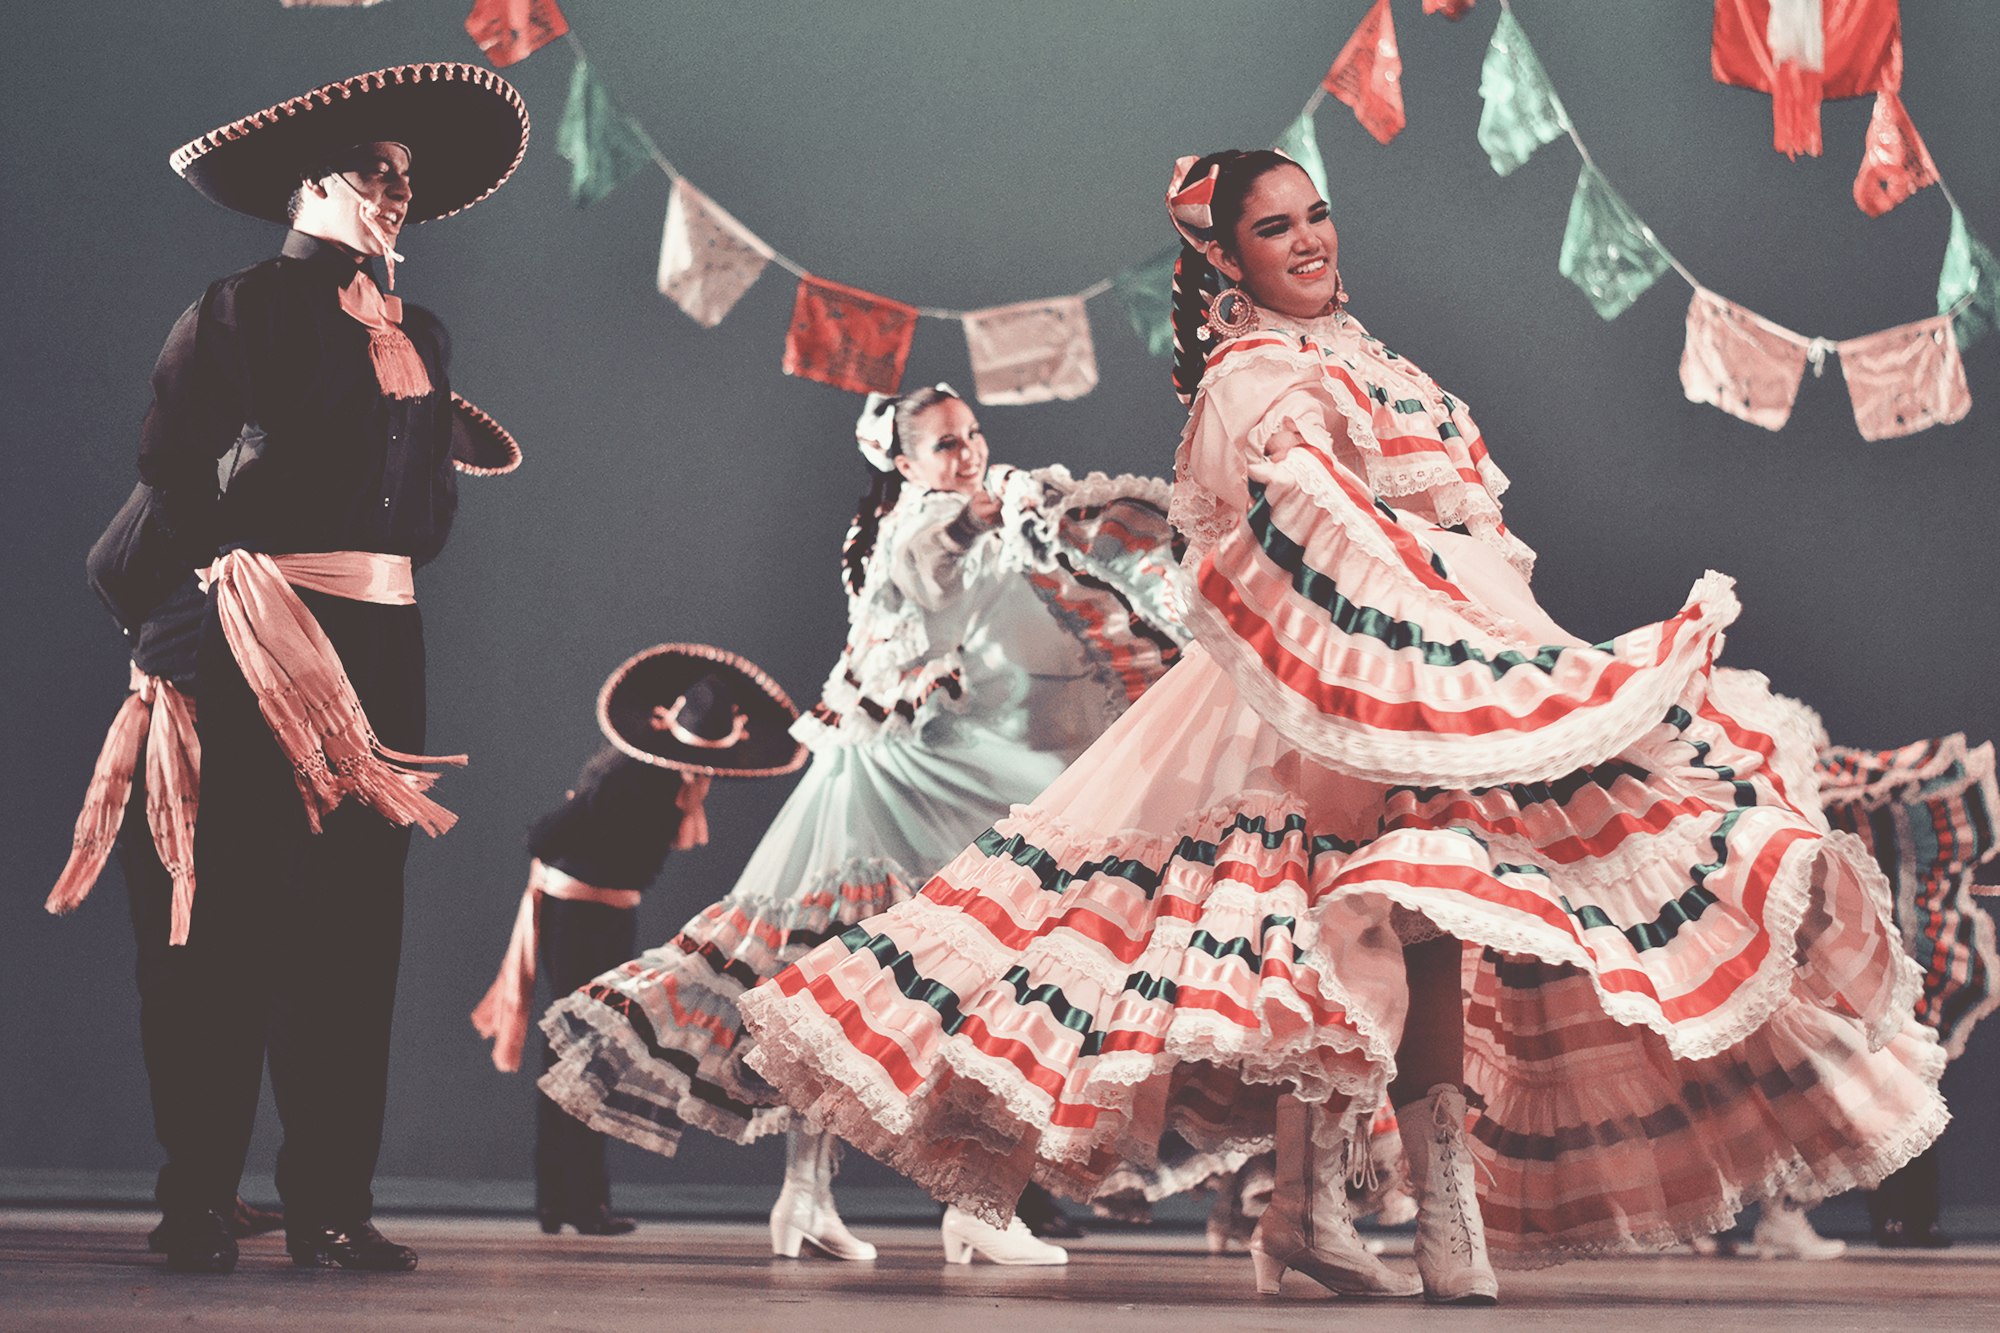 What are the most popular festivals in Guadalajara?